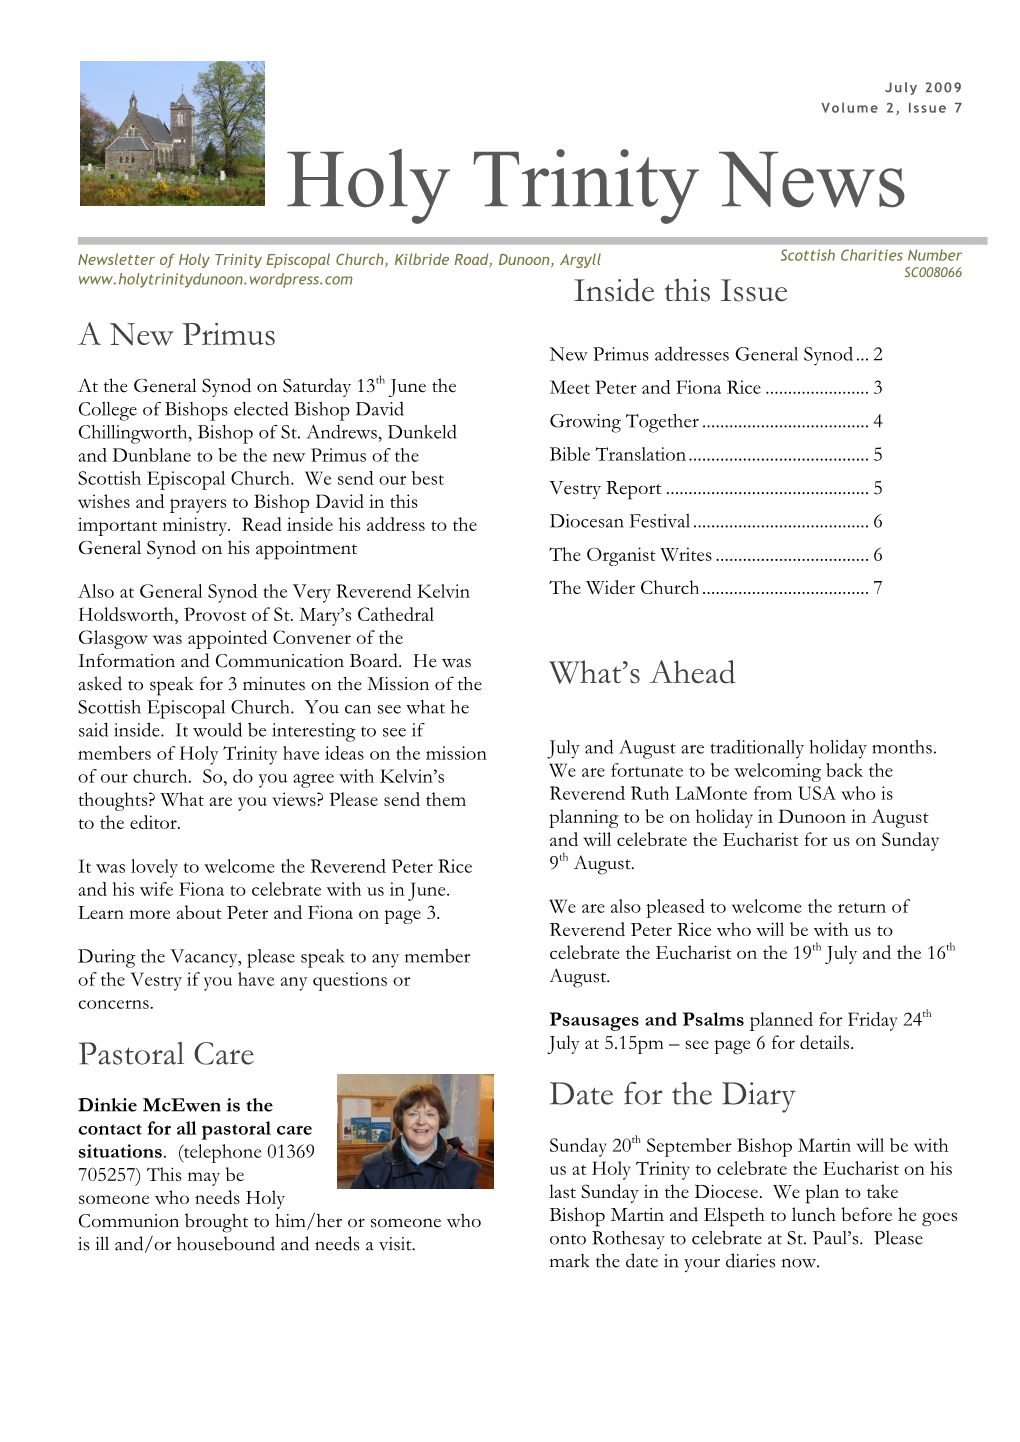 July 2009 Volume 2, Issue 7 Holy Trinity News